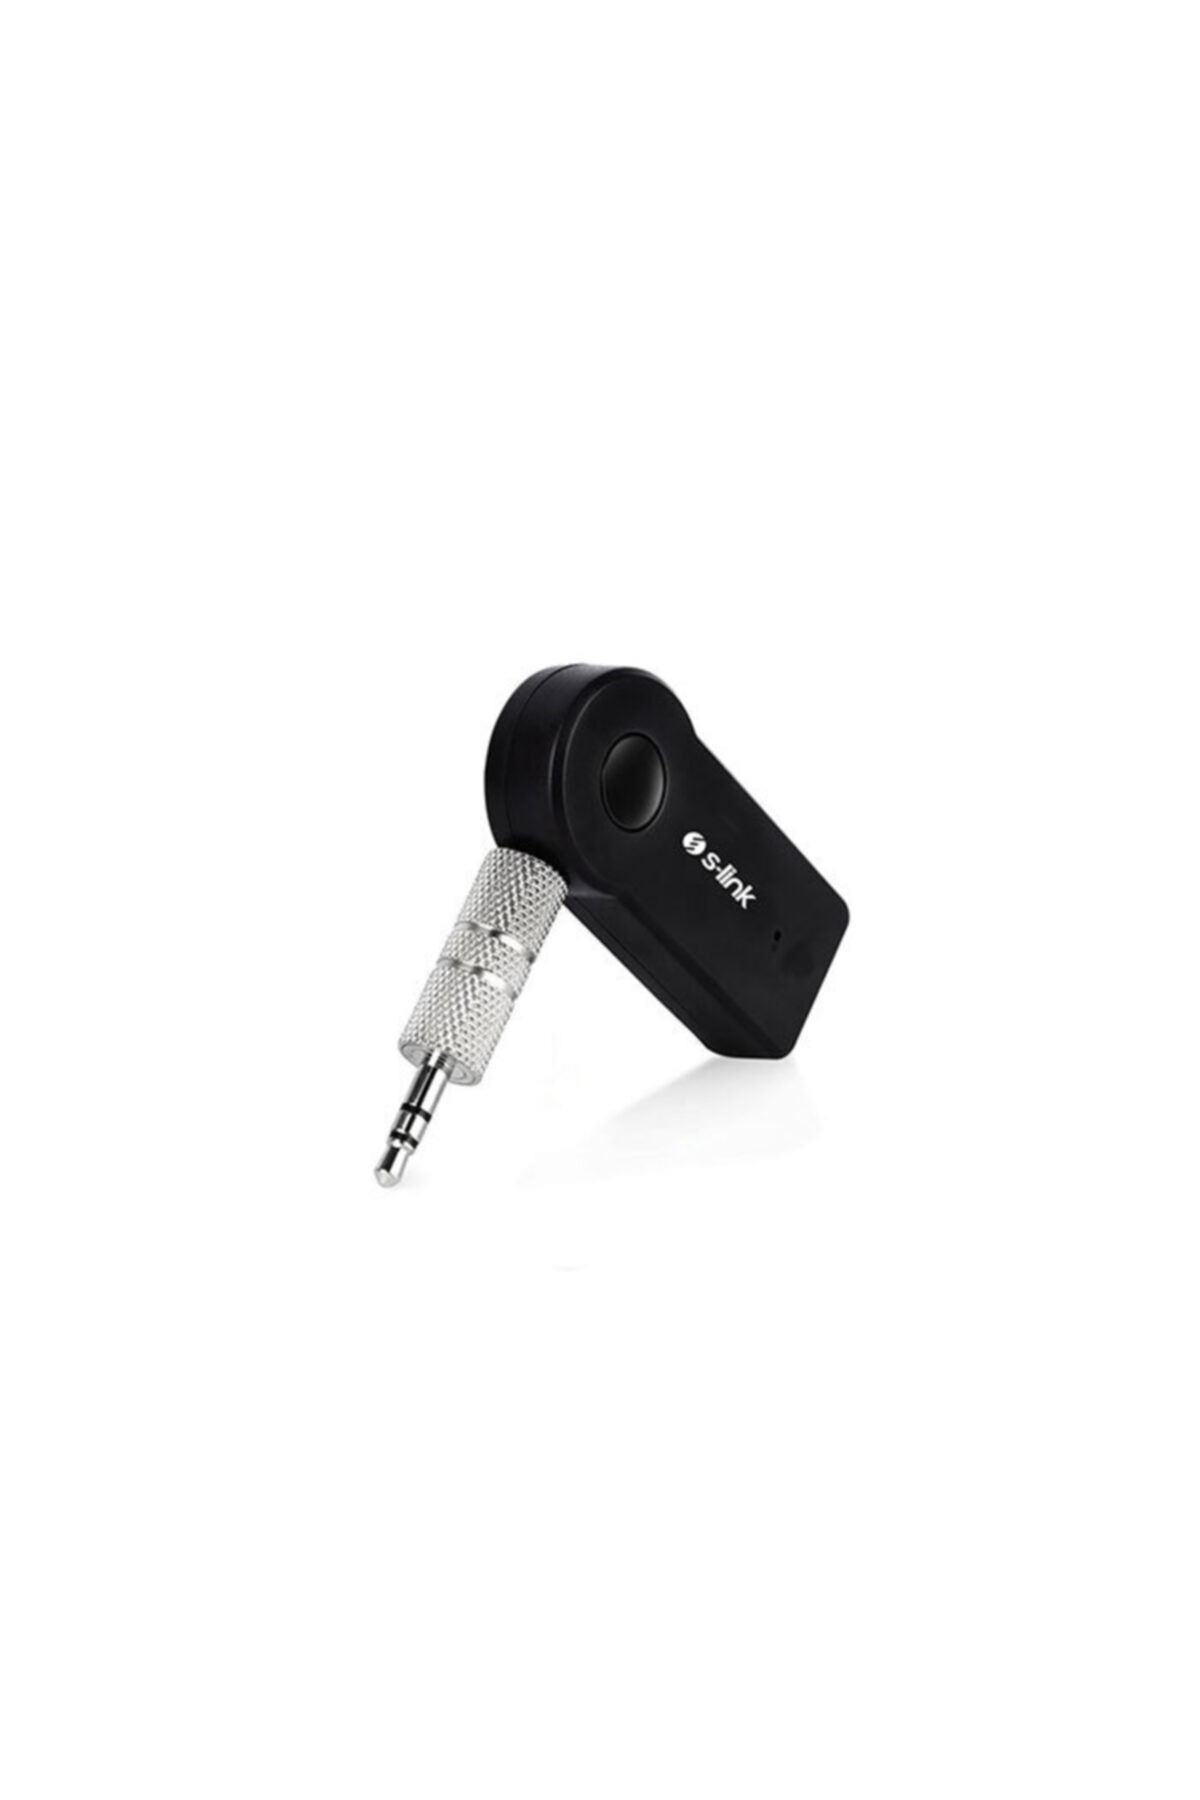 S-Link Sl-bt20 Car Bluetooth Music Receiver